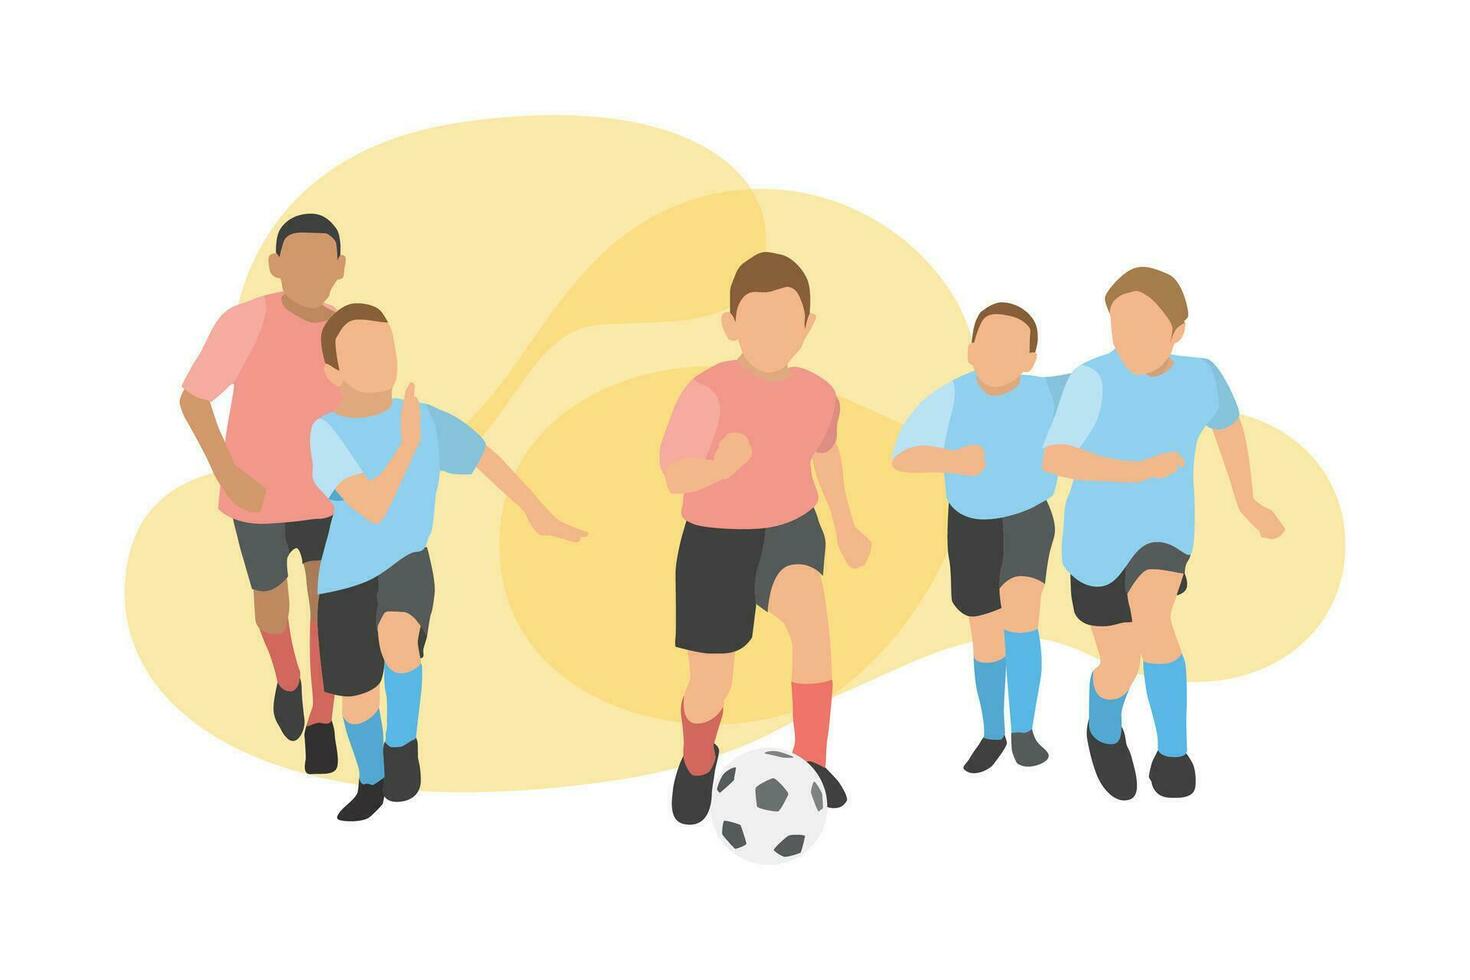 Soccer Players of Kids. Vector illustration